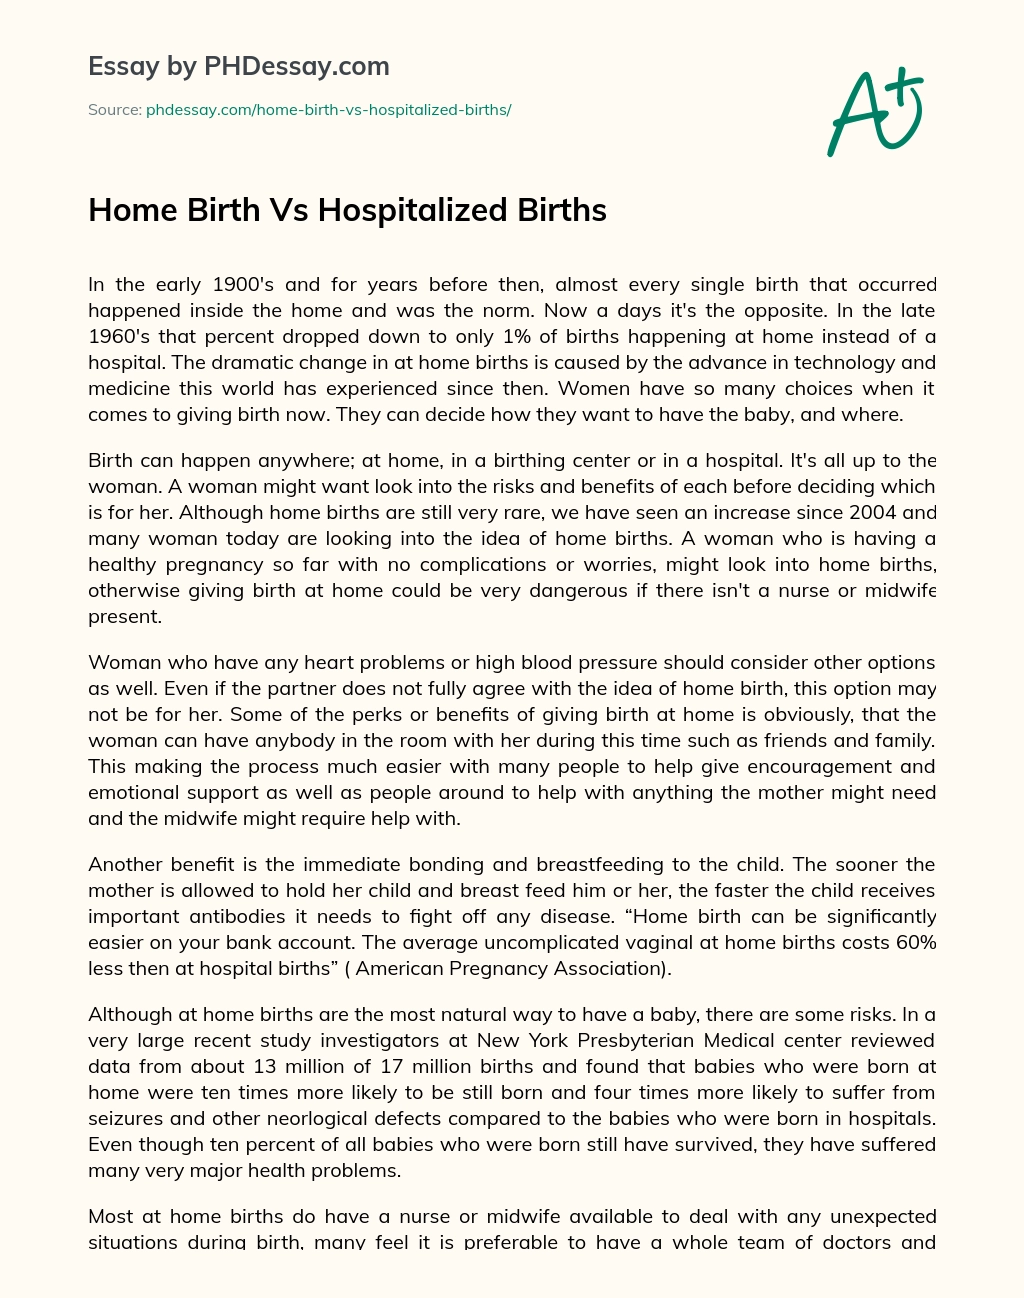 Home Birth Vs Hospitalized Births essay